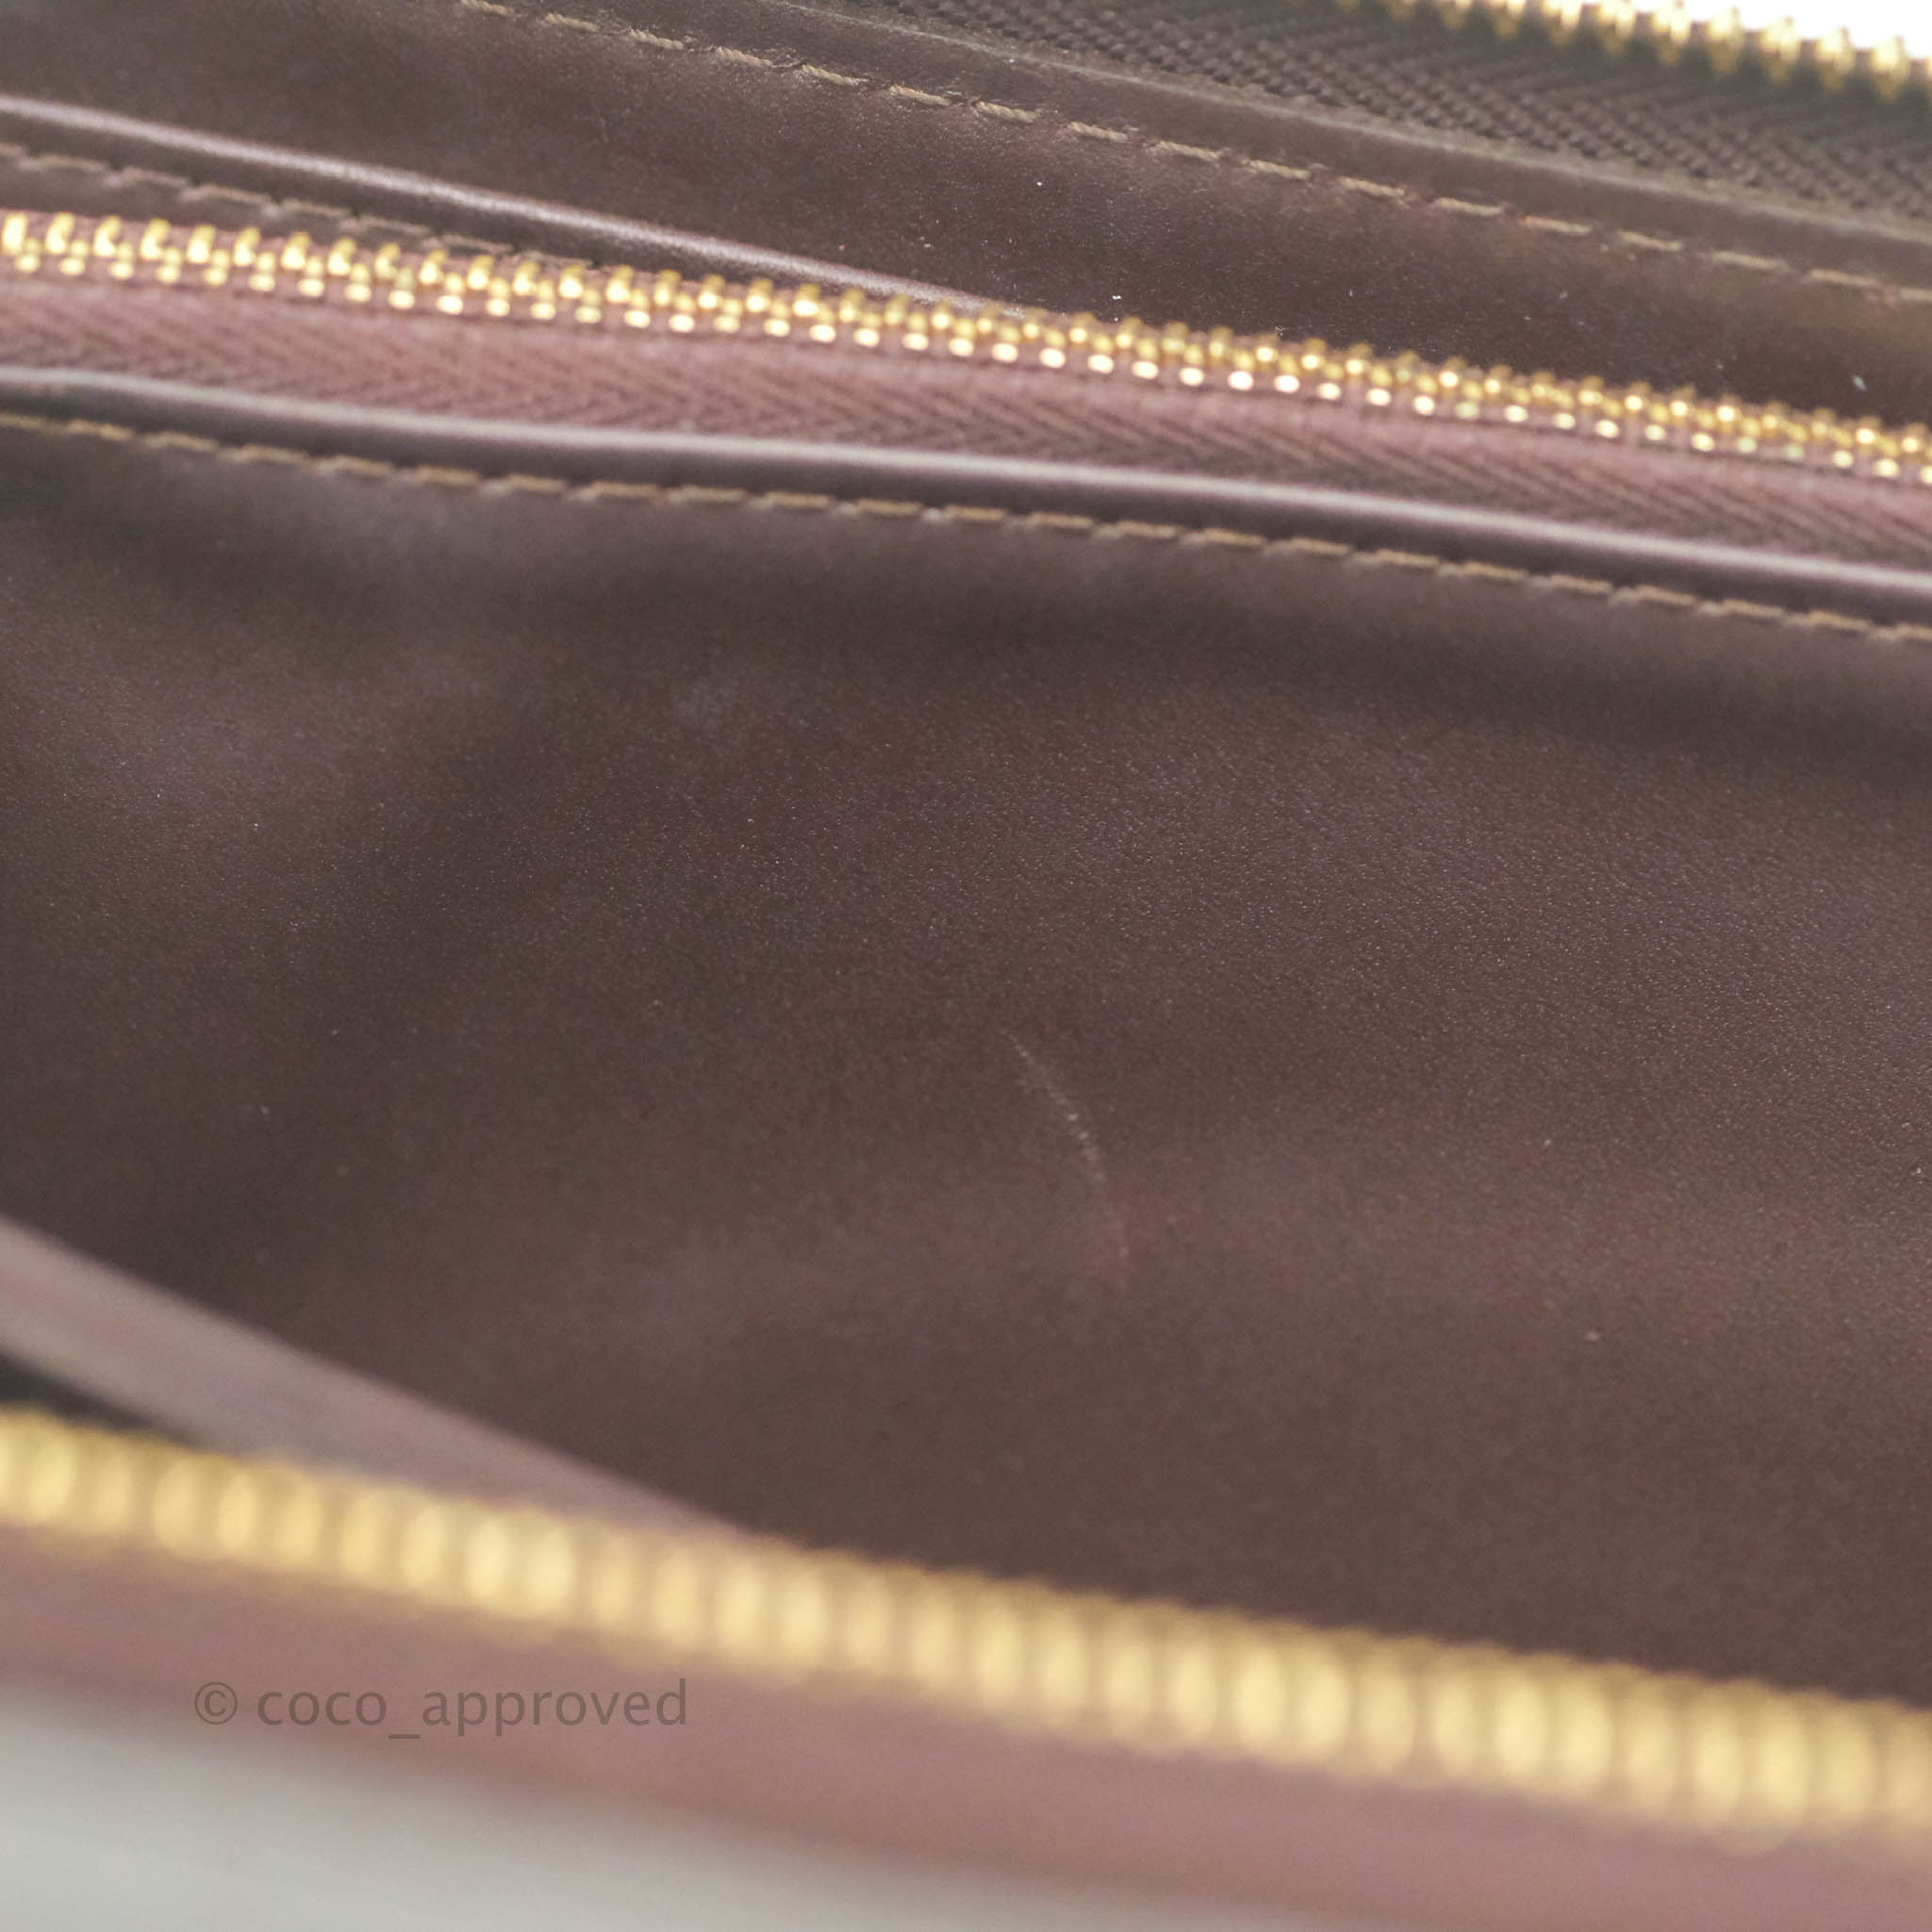 Louis Vuitton Keychain Wallet Tan - $37 (78% Off Retail) - From Janett